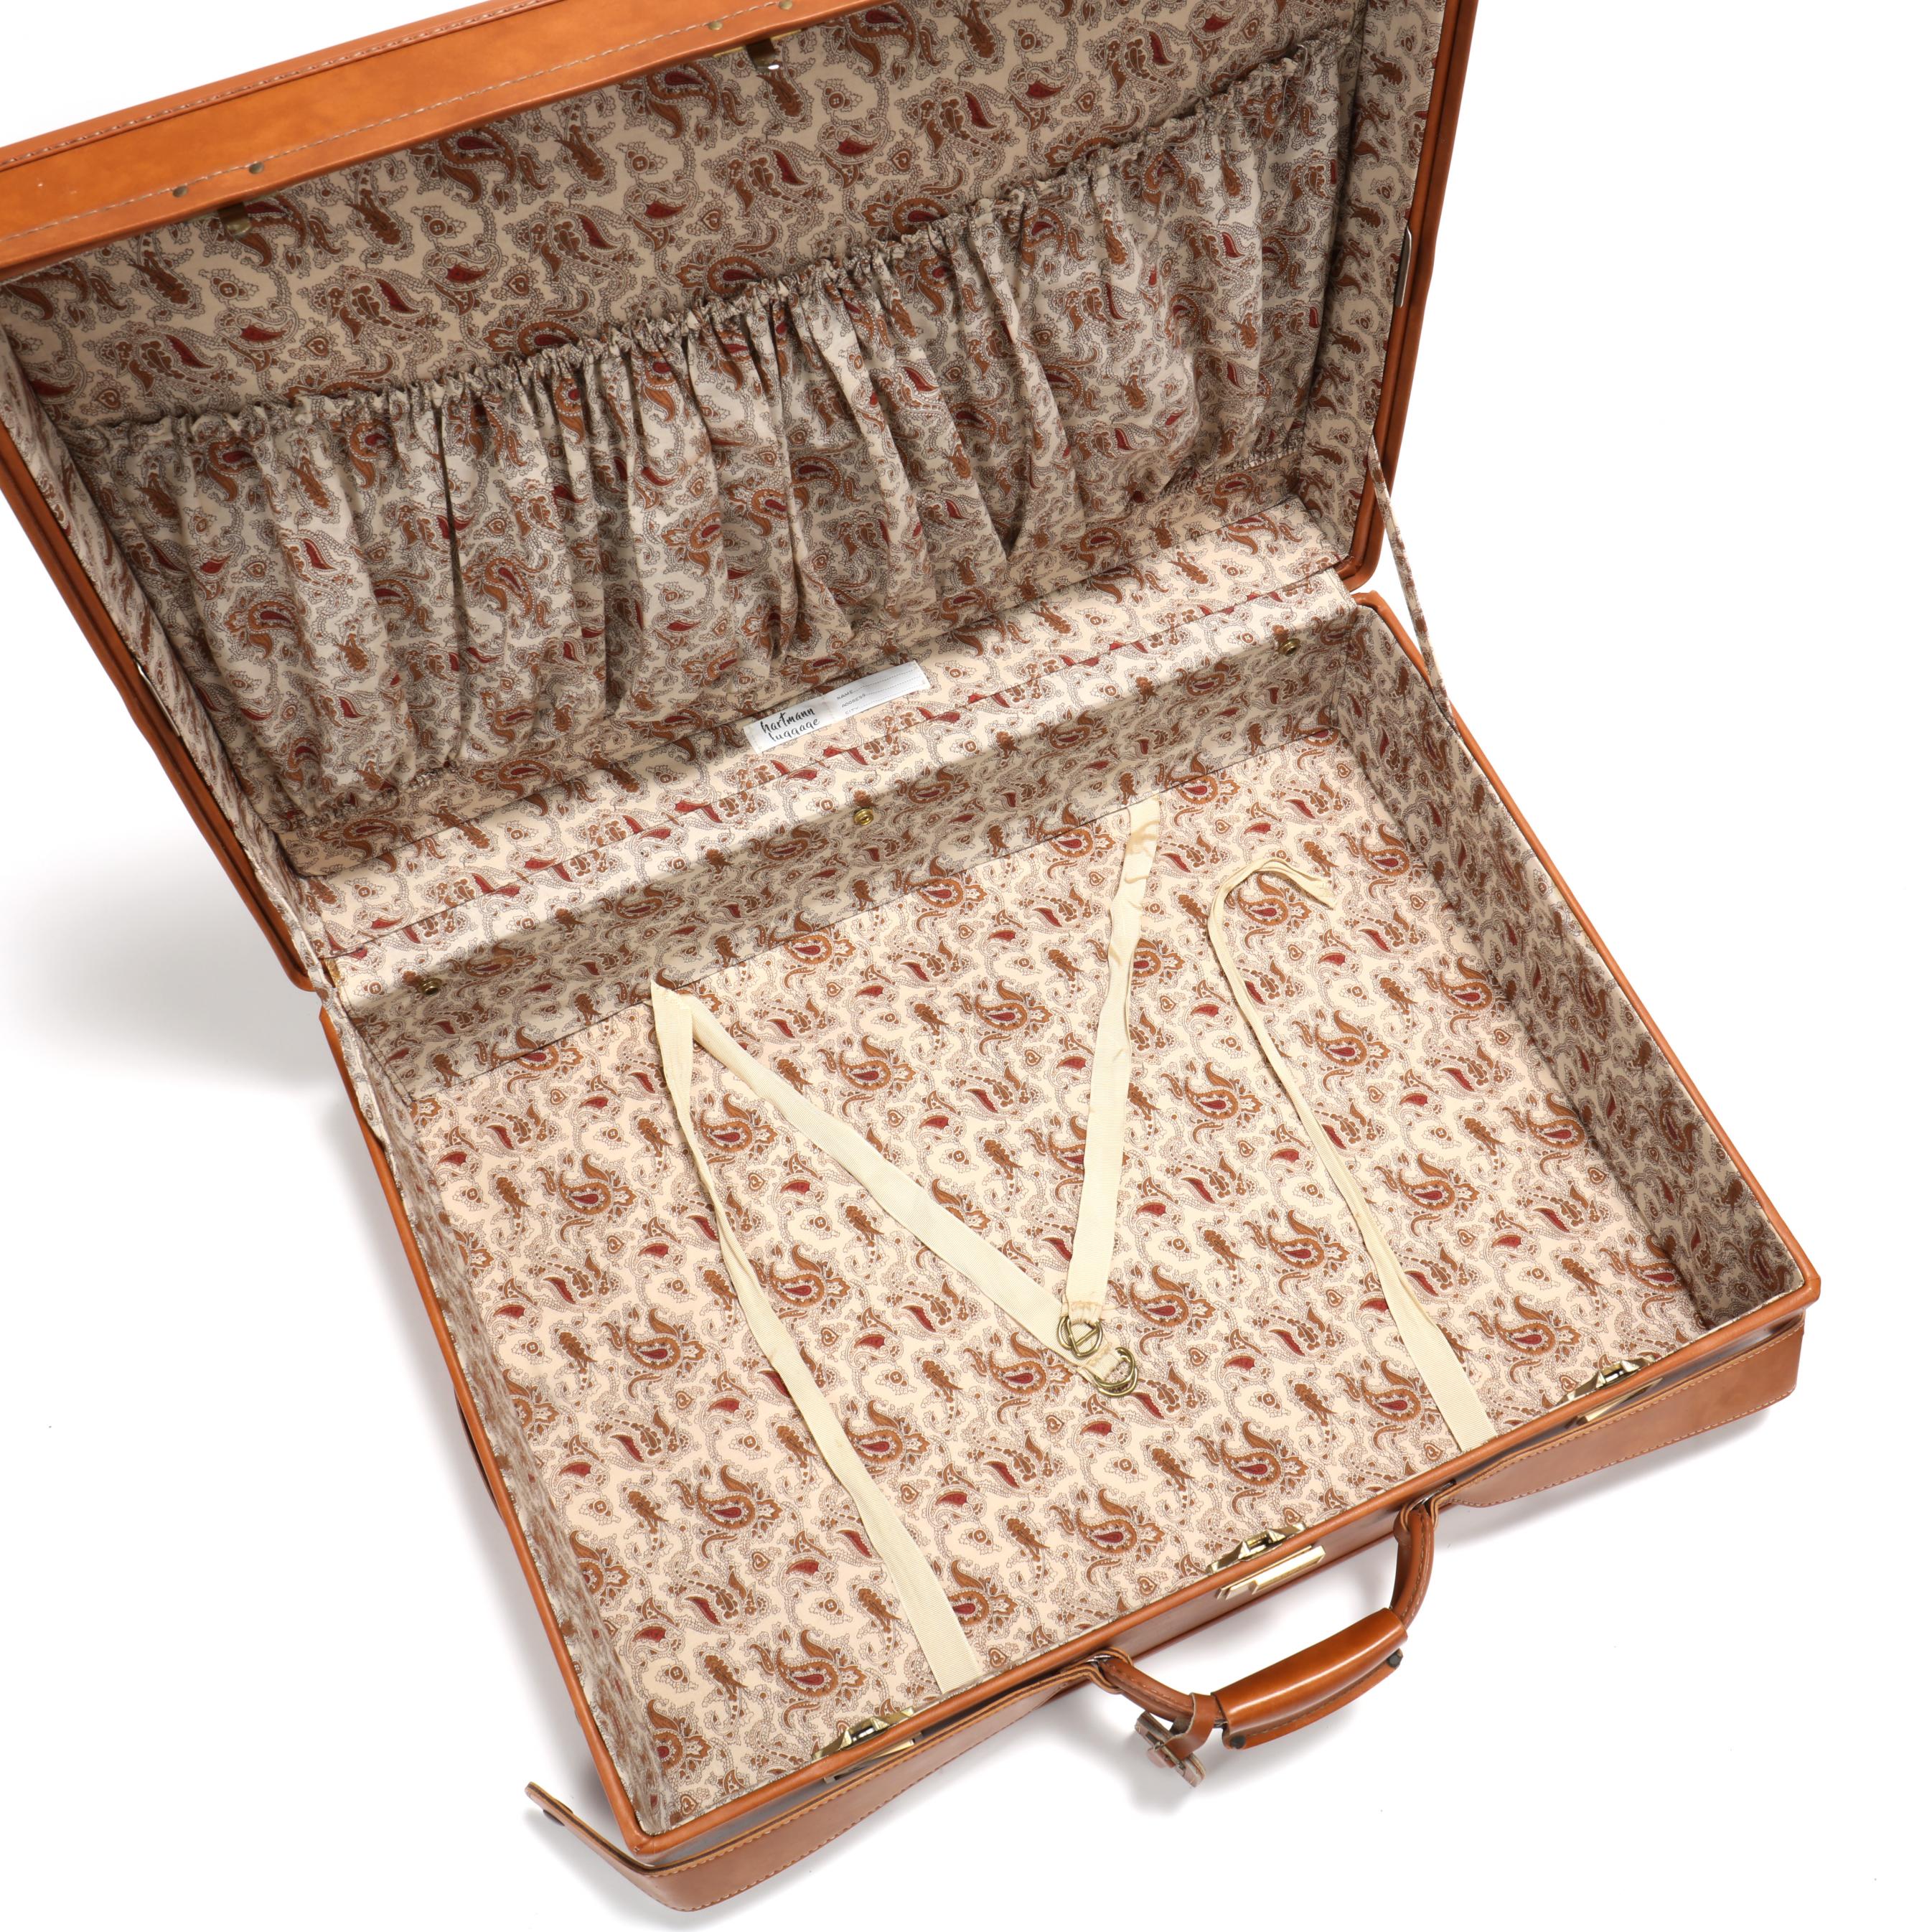 Sold at Auction: Vintage Hartmann Luggage 4 Piece Set